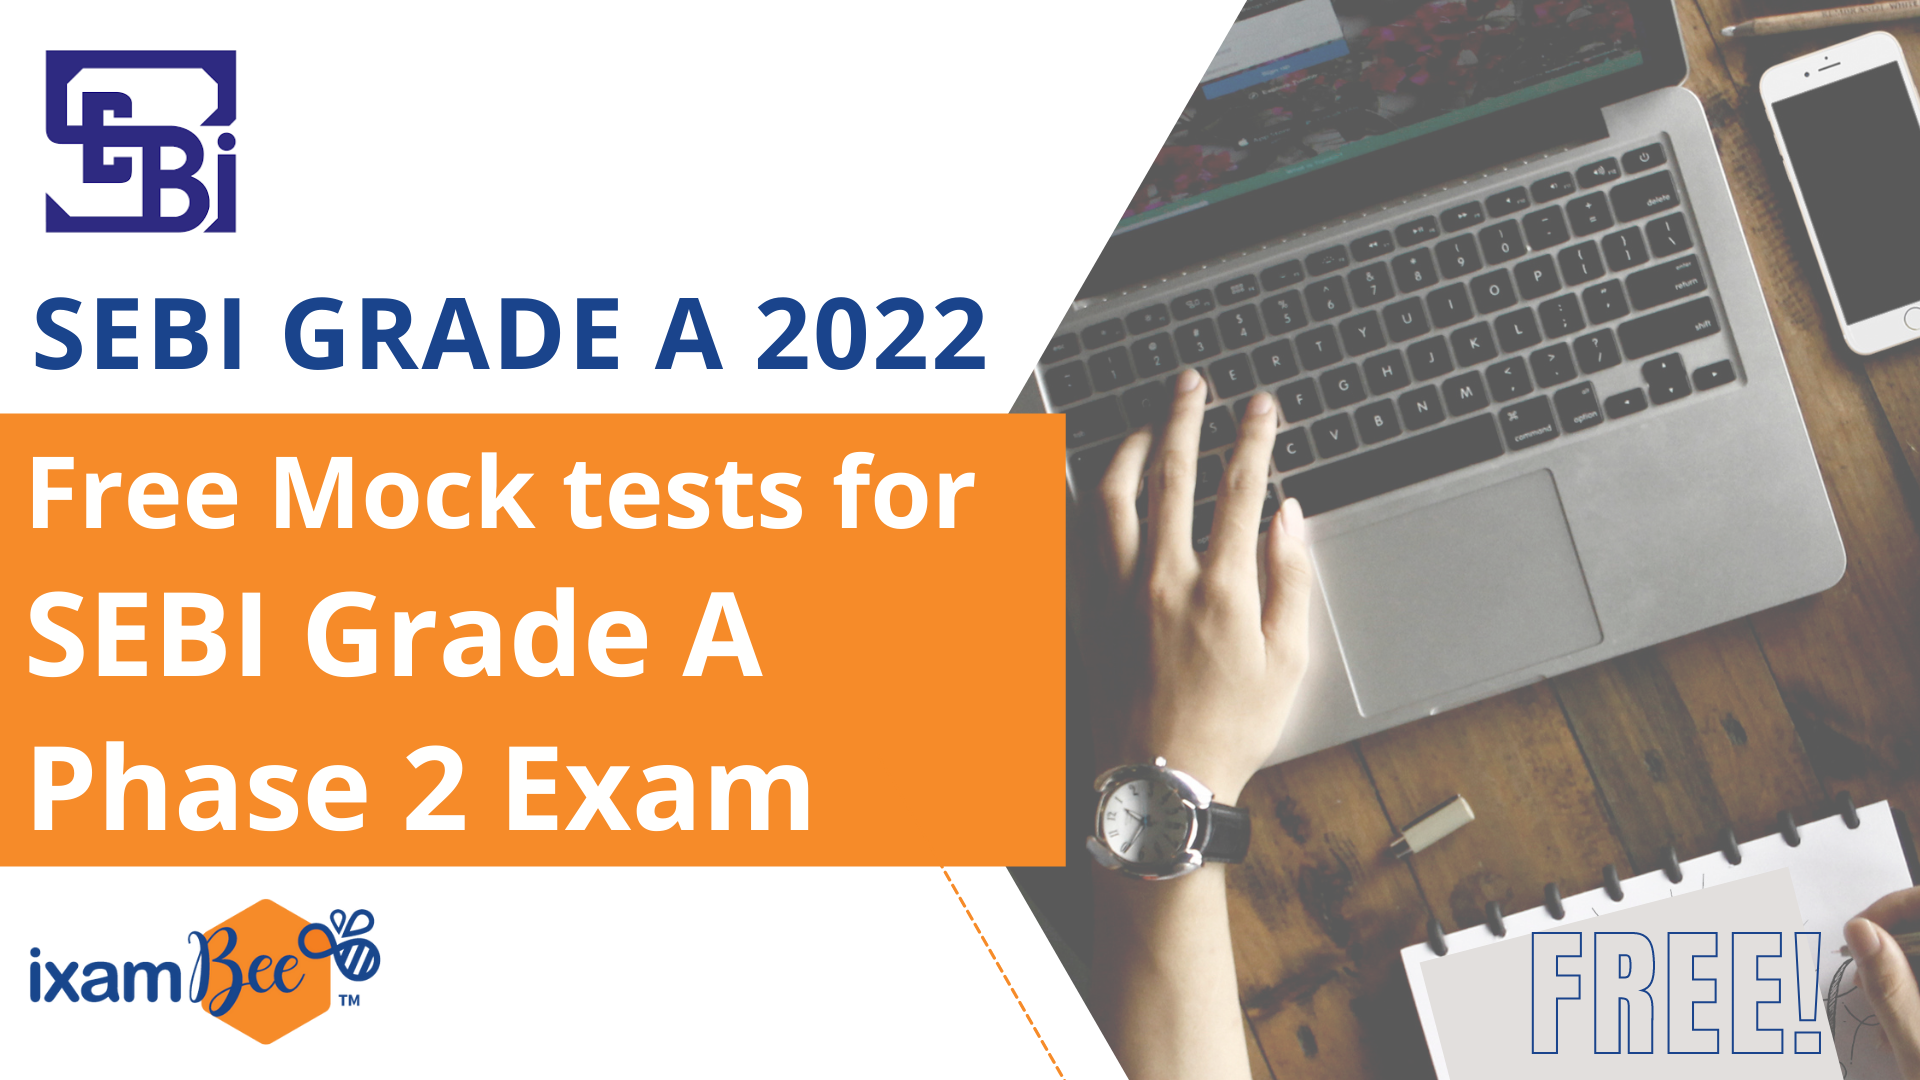 SEBI Grade A 2022: Free Mock Tests for SEBI Grade A Phase 2 Exam